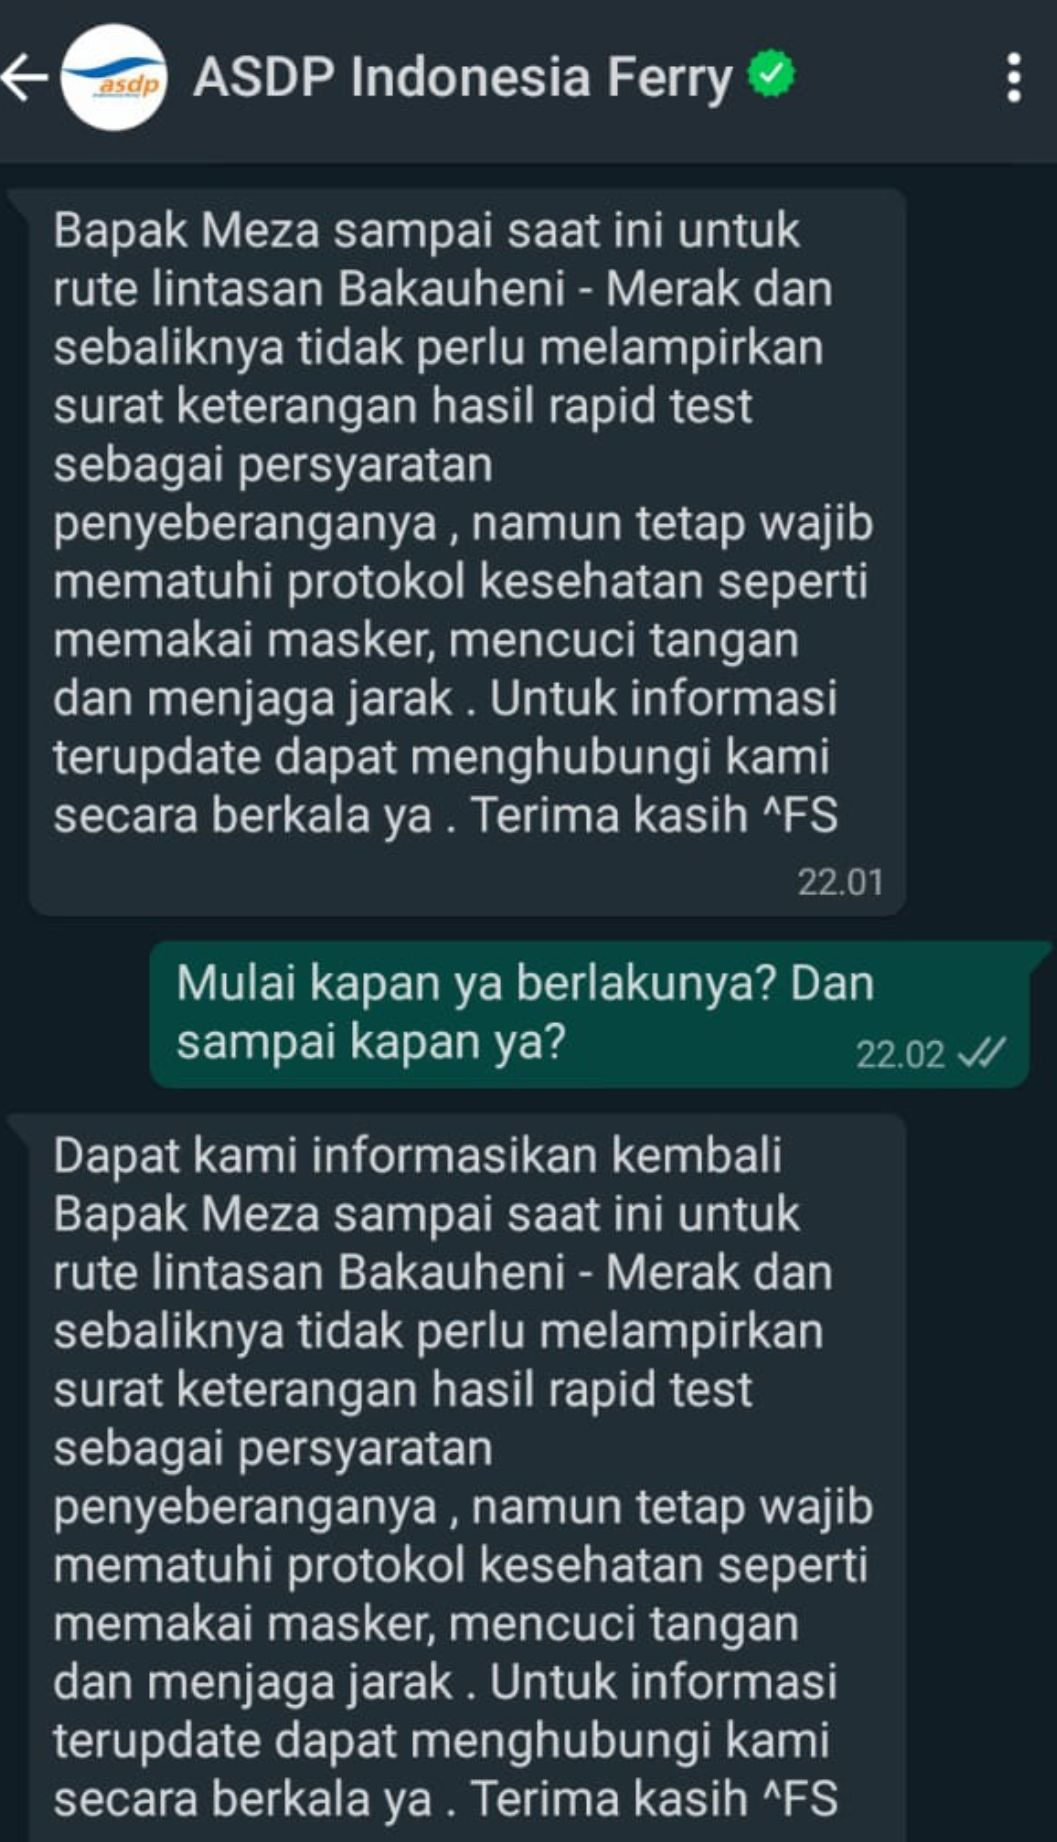 Tangkapan layar percakapan melalui akun whatsapp resmi PT. ASDP Persero dengan Metro Lampung News, Rabu 24 Februari 2021